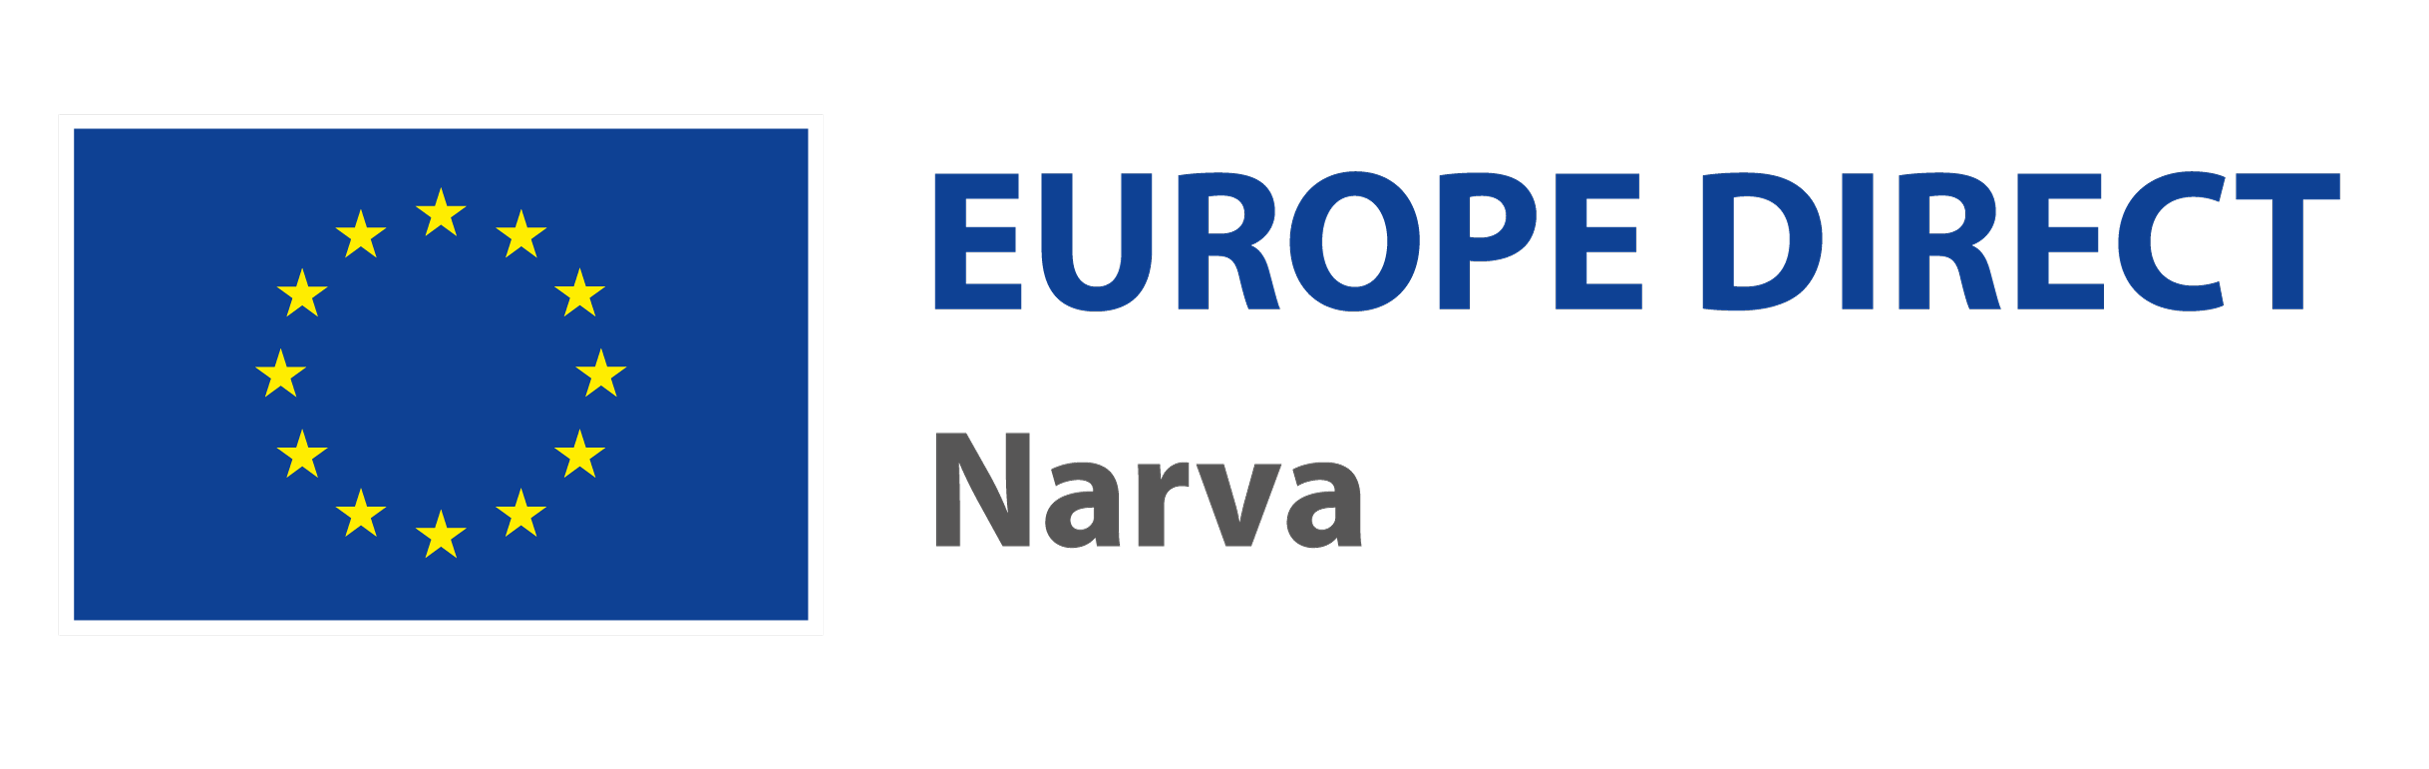 Europe Direct Narva